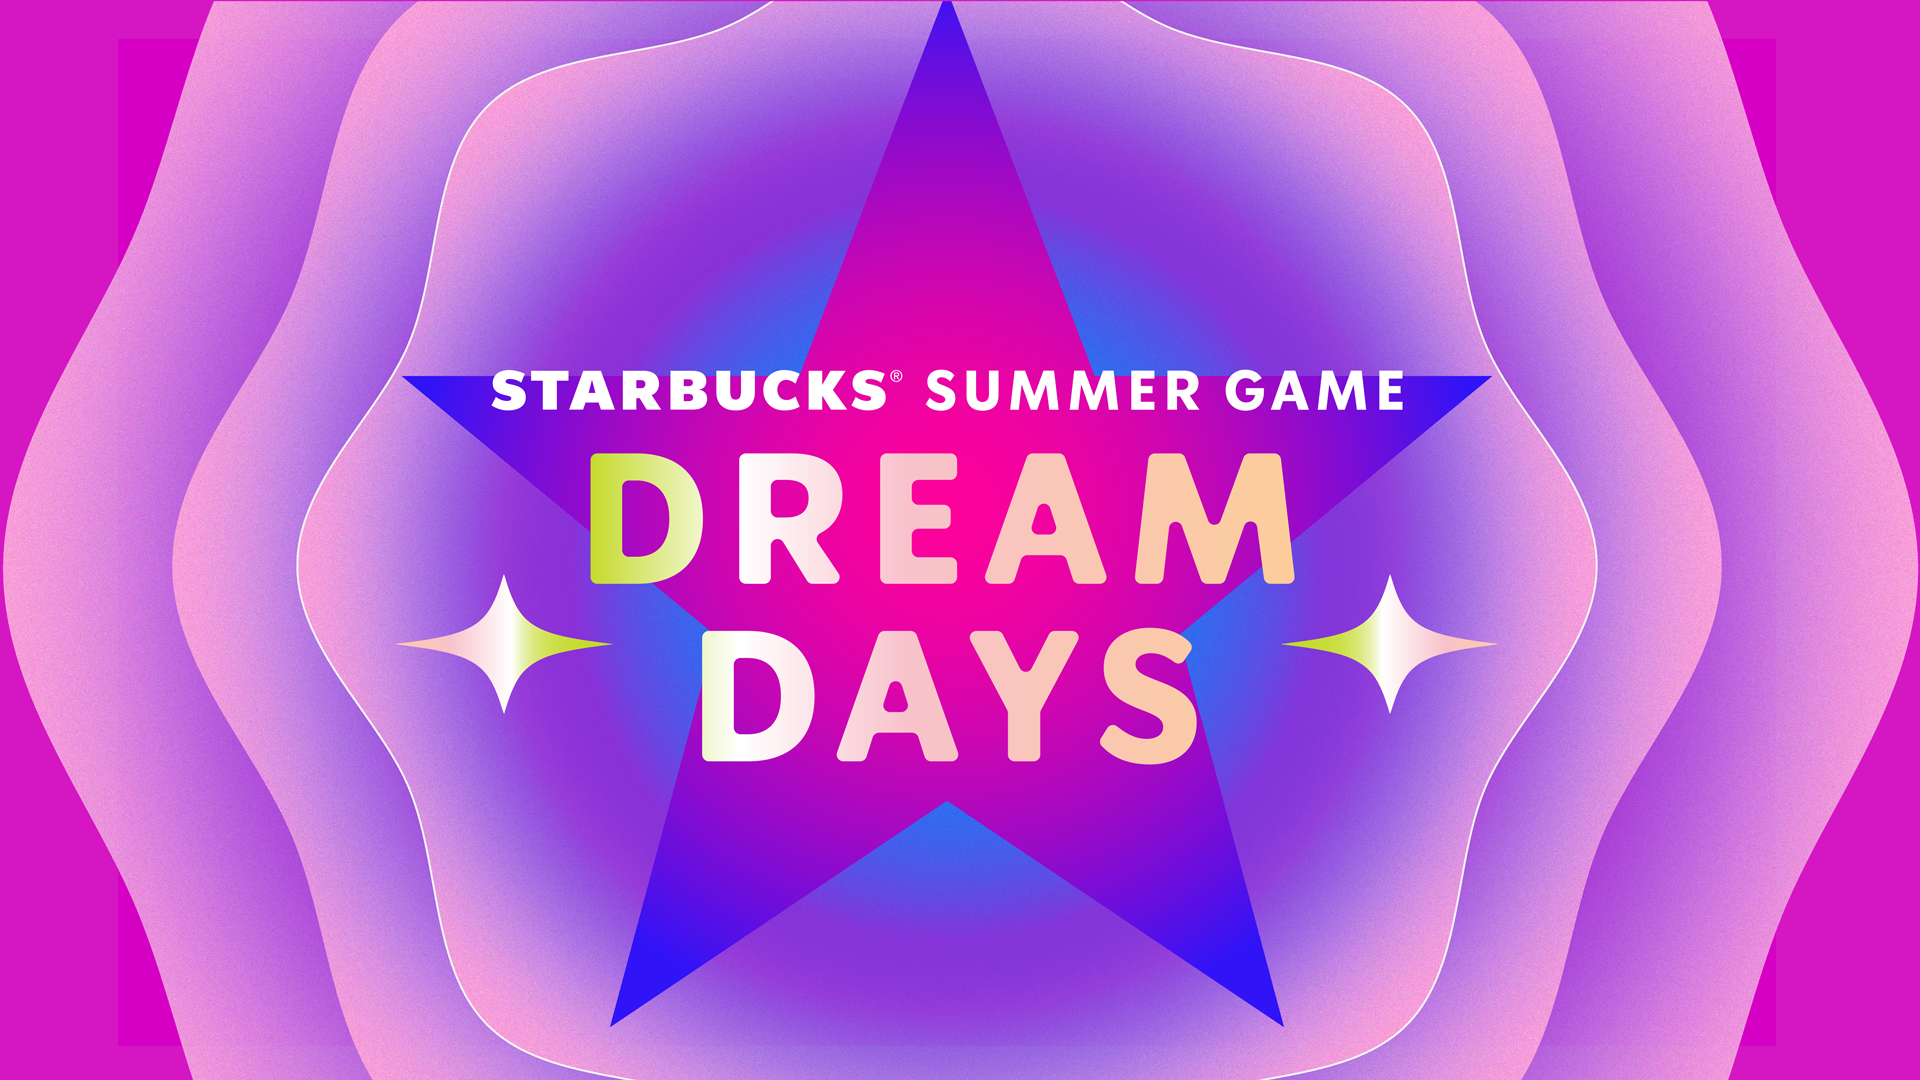 Play the Starbucks Summer Game